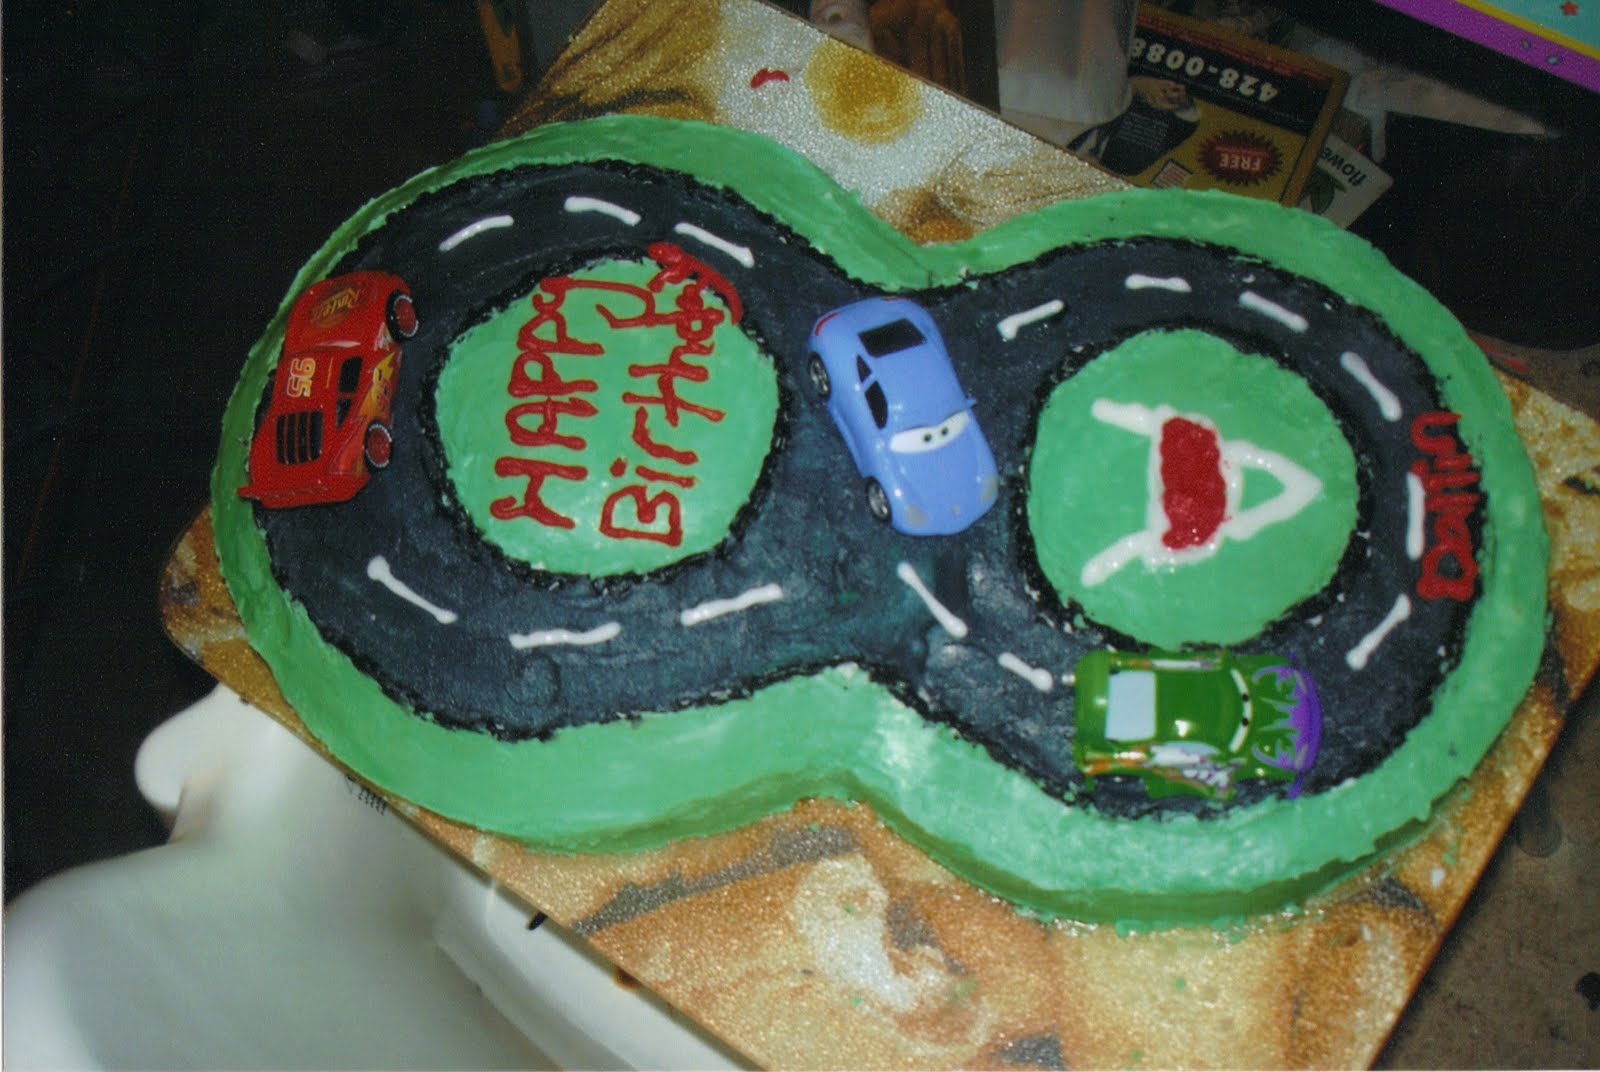 Race Track Cake